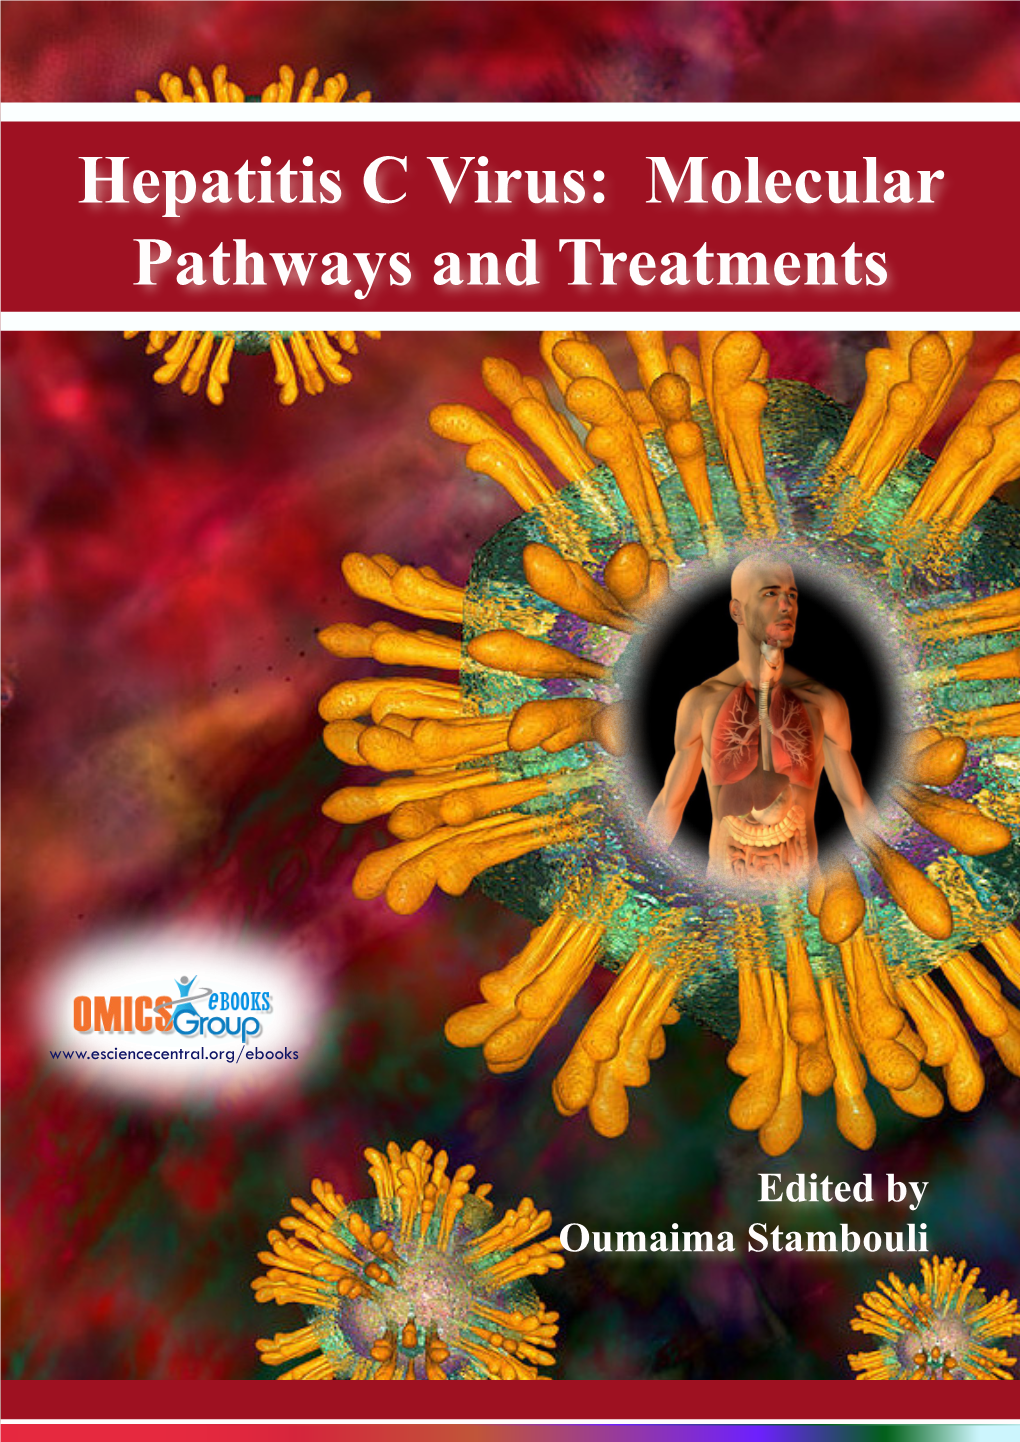 Hepatitis C Virus: Molecular Pathways and Treatments